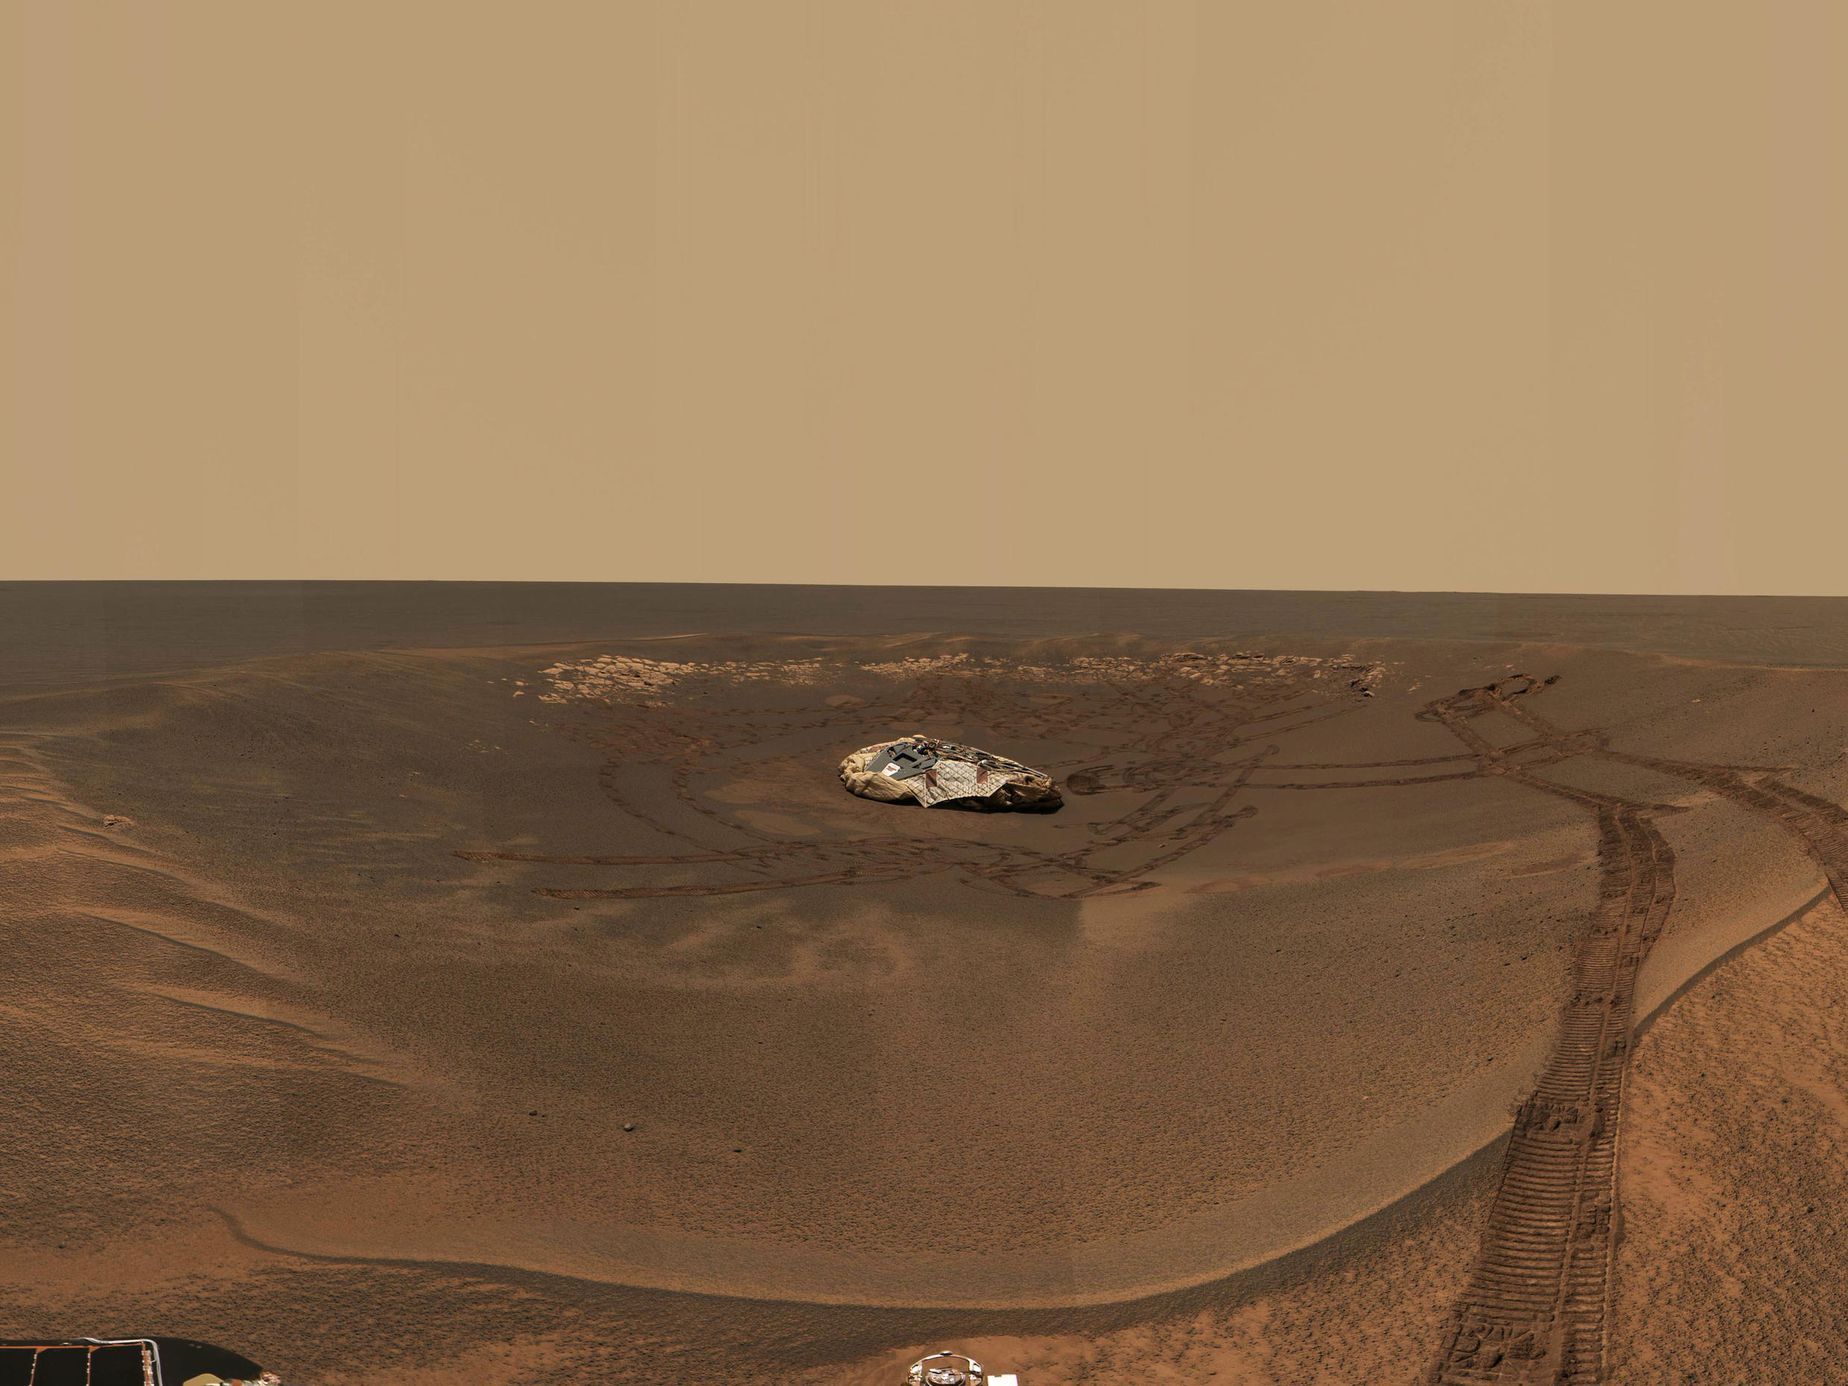 Mars - Opportunity